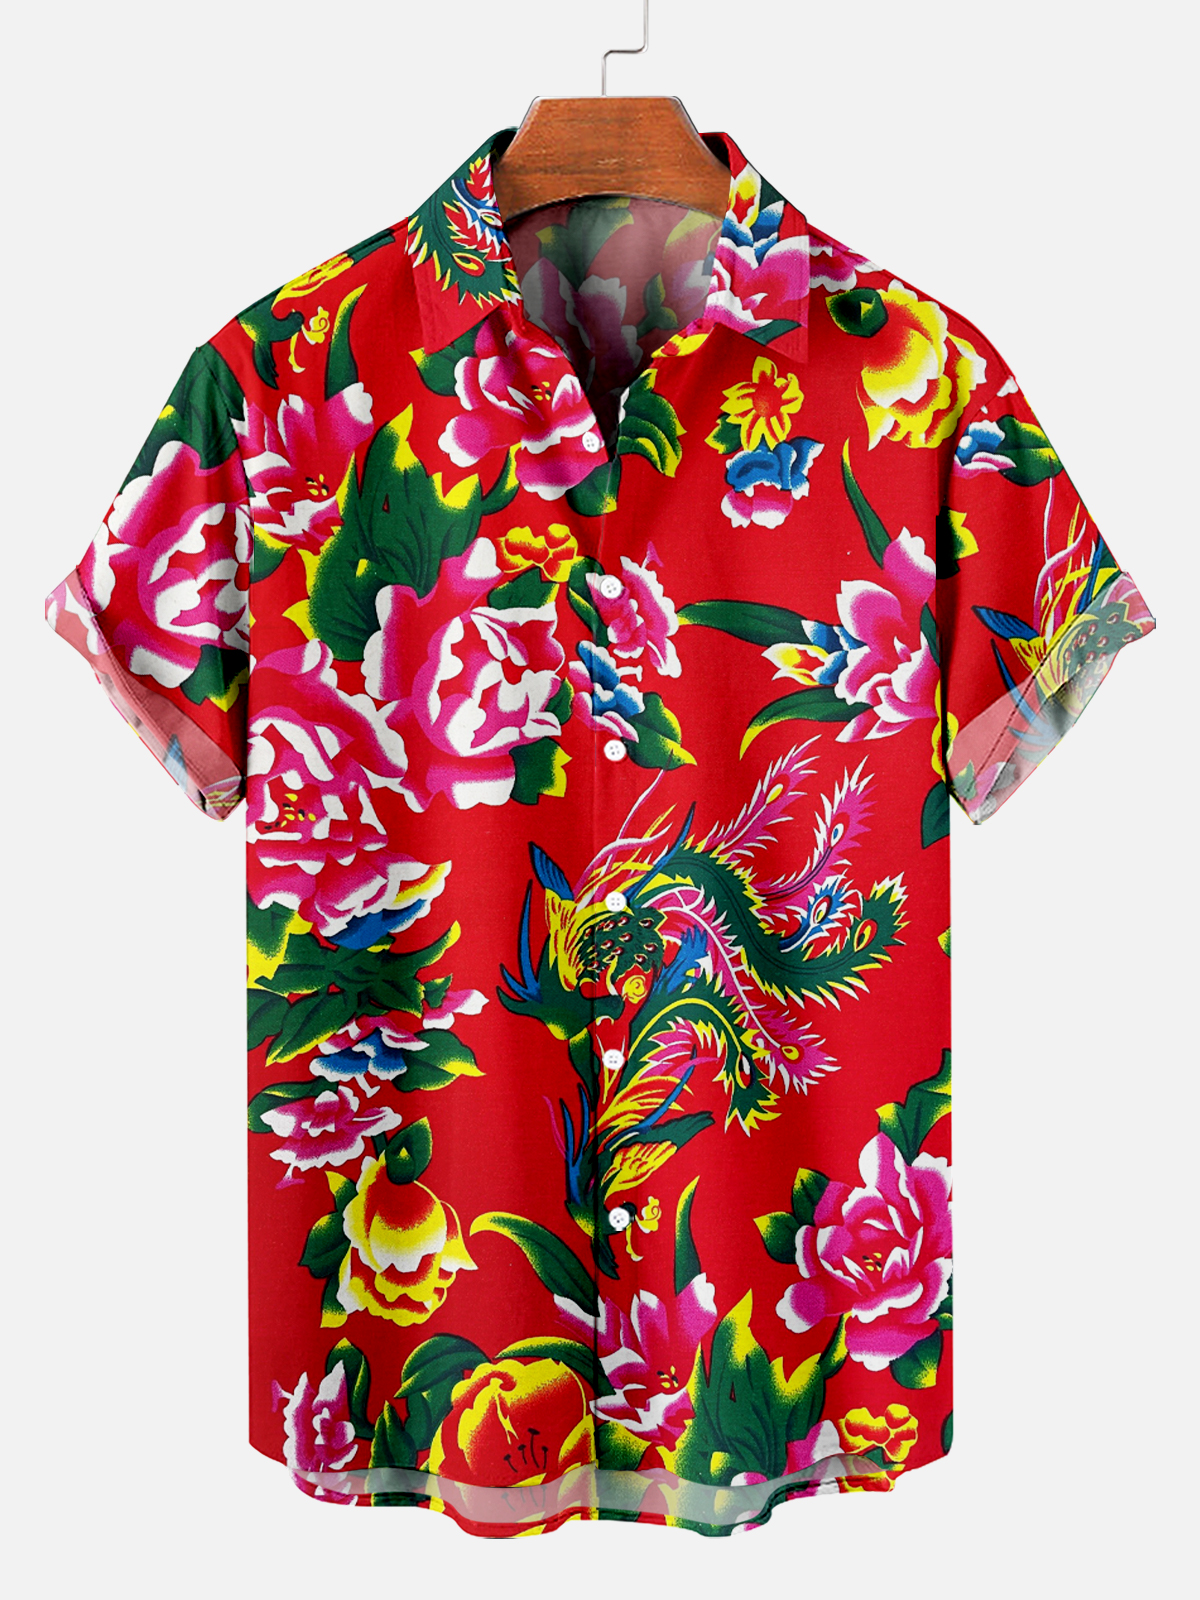 Men's Northeastern Flower and Phoenix Fashion Casual Short Sleeve Shirt PLUSCLOTHESMAN